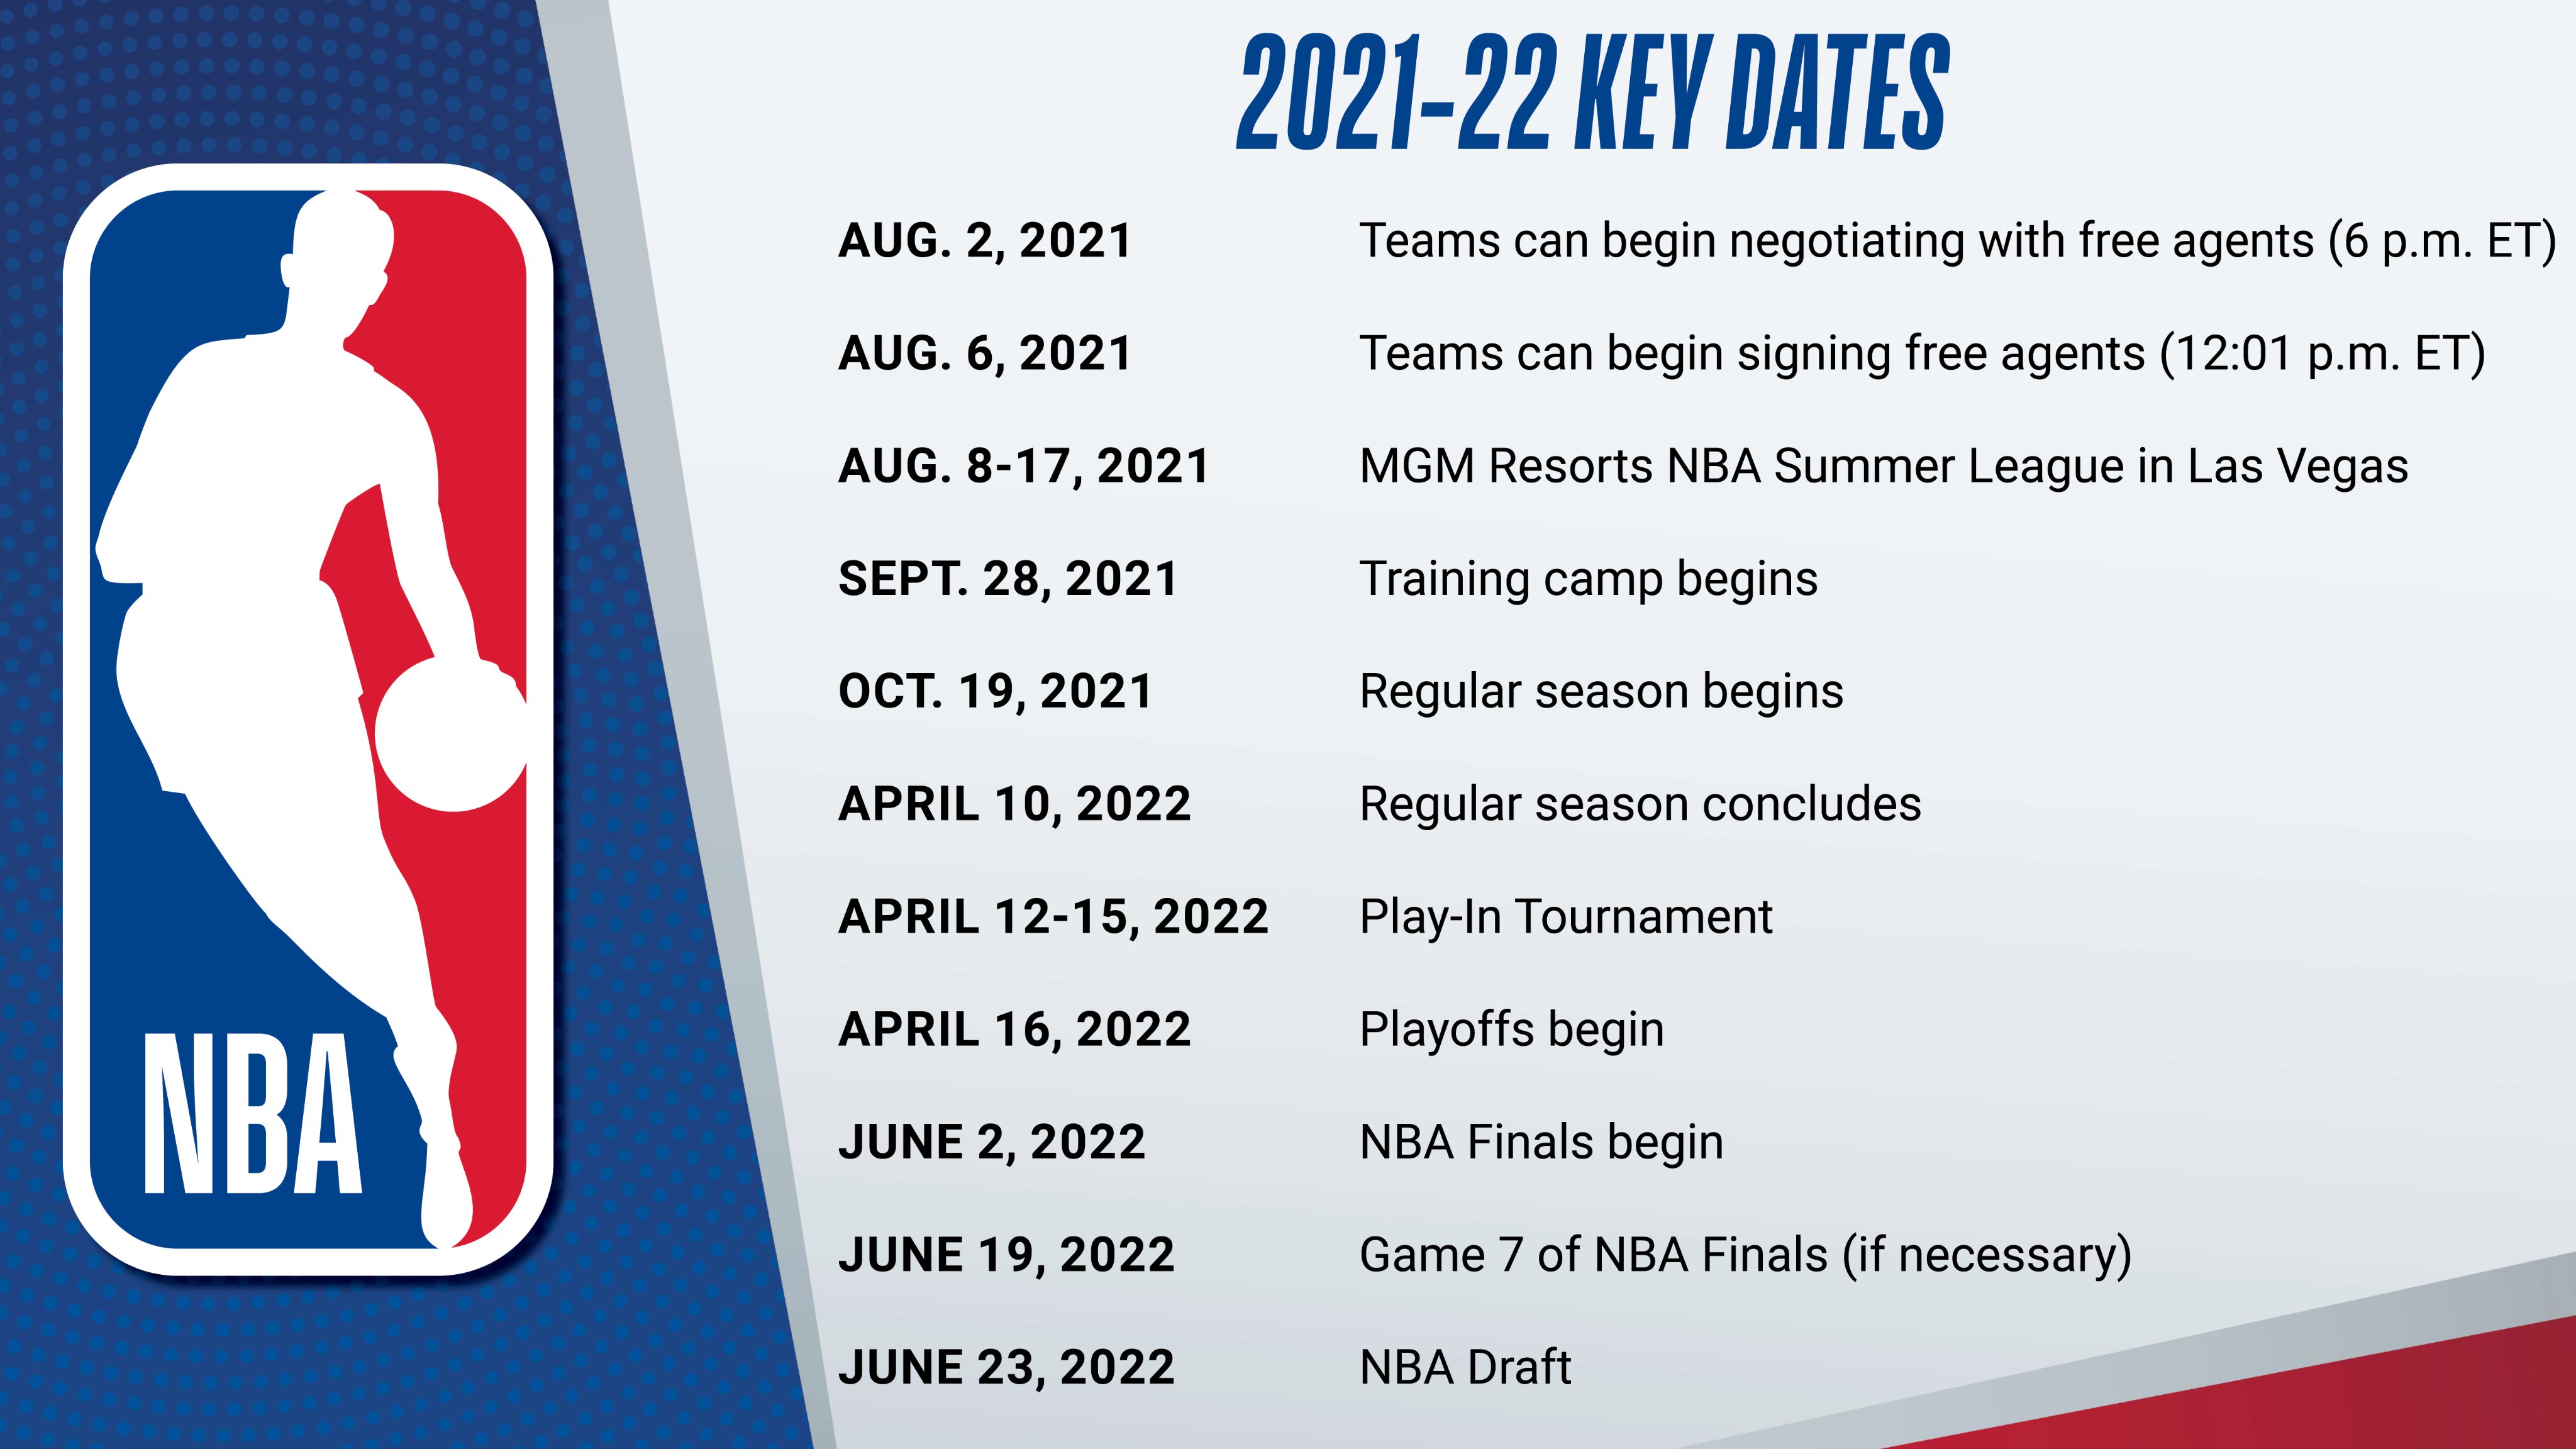 Nba Championship Schedule 2022 Nba Communications On Twitter: "Key Dates For The 2021-22 Nba Season ⬇️  Https://T.co/Nbwcivrhzh" / Twitter